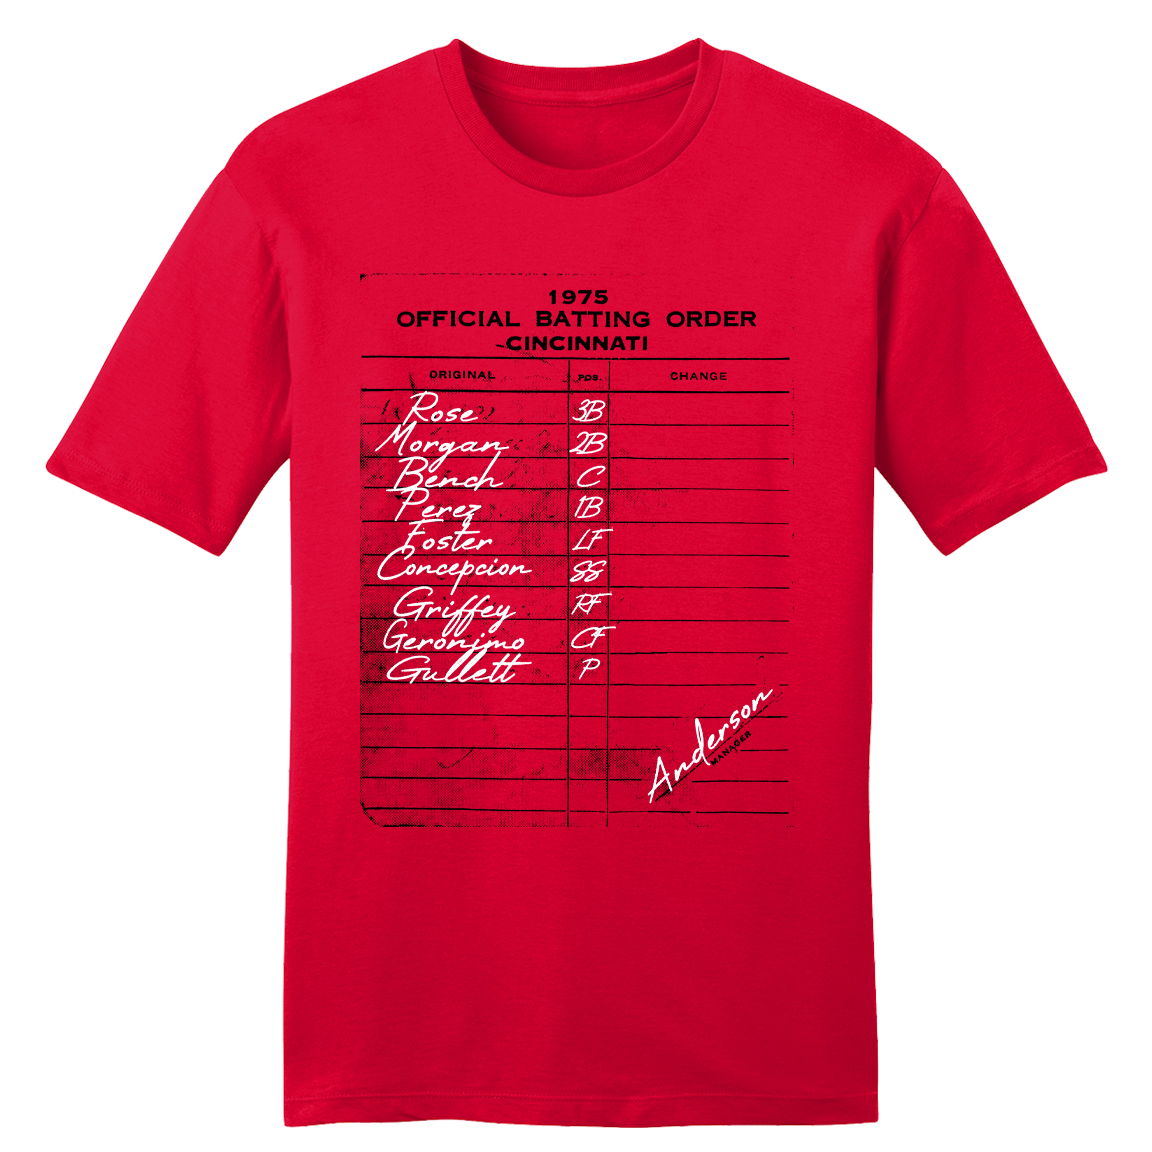 1975 Cincinnati Baseball Batting Order - Cincy Shirts